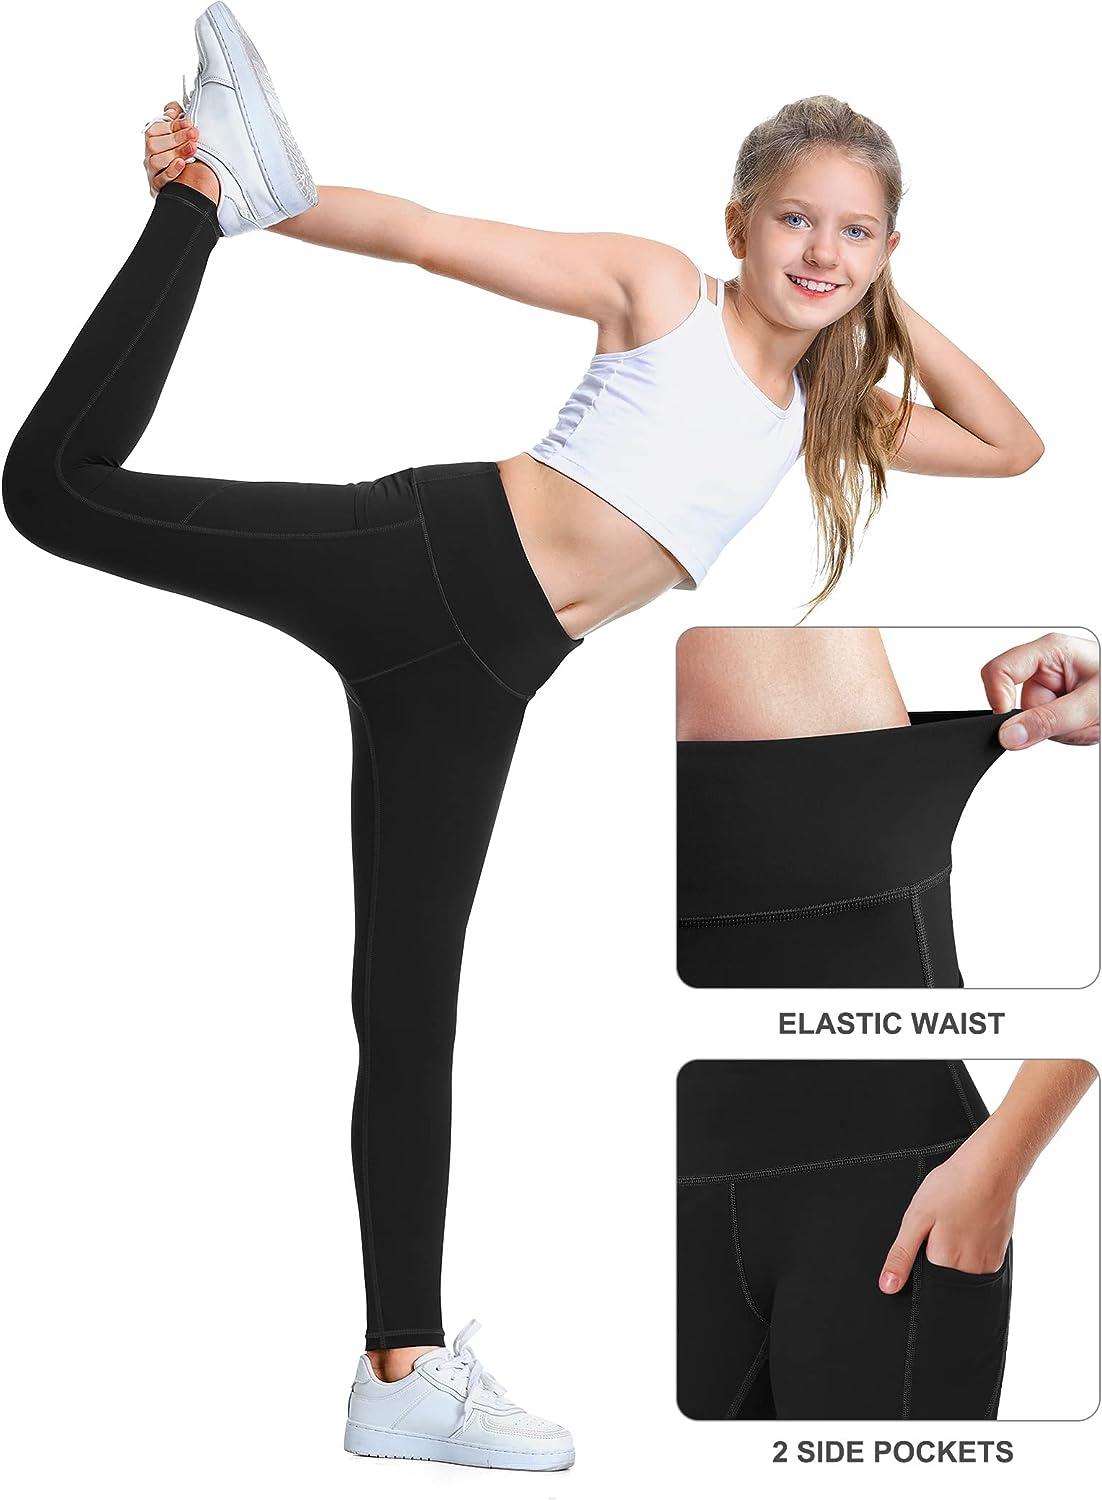 Iuga High Waist Yoga Pants With Pockets, Tummy Control Workout